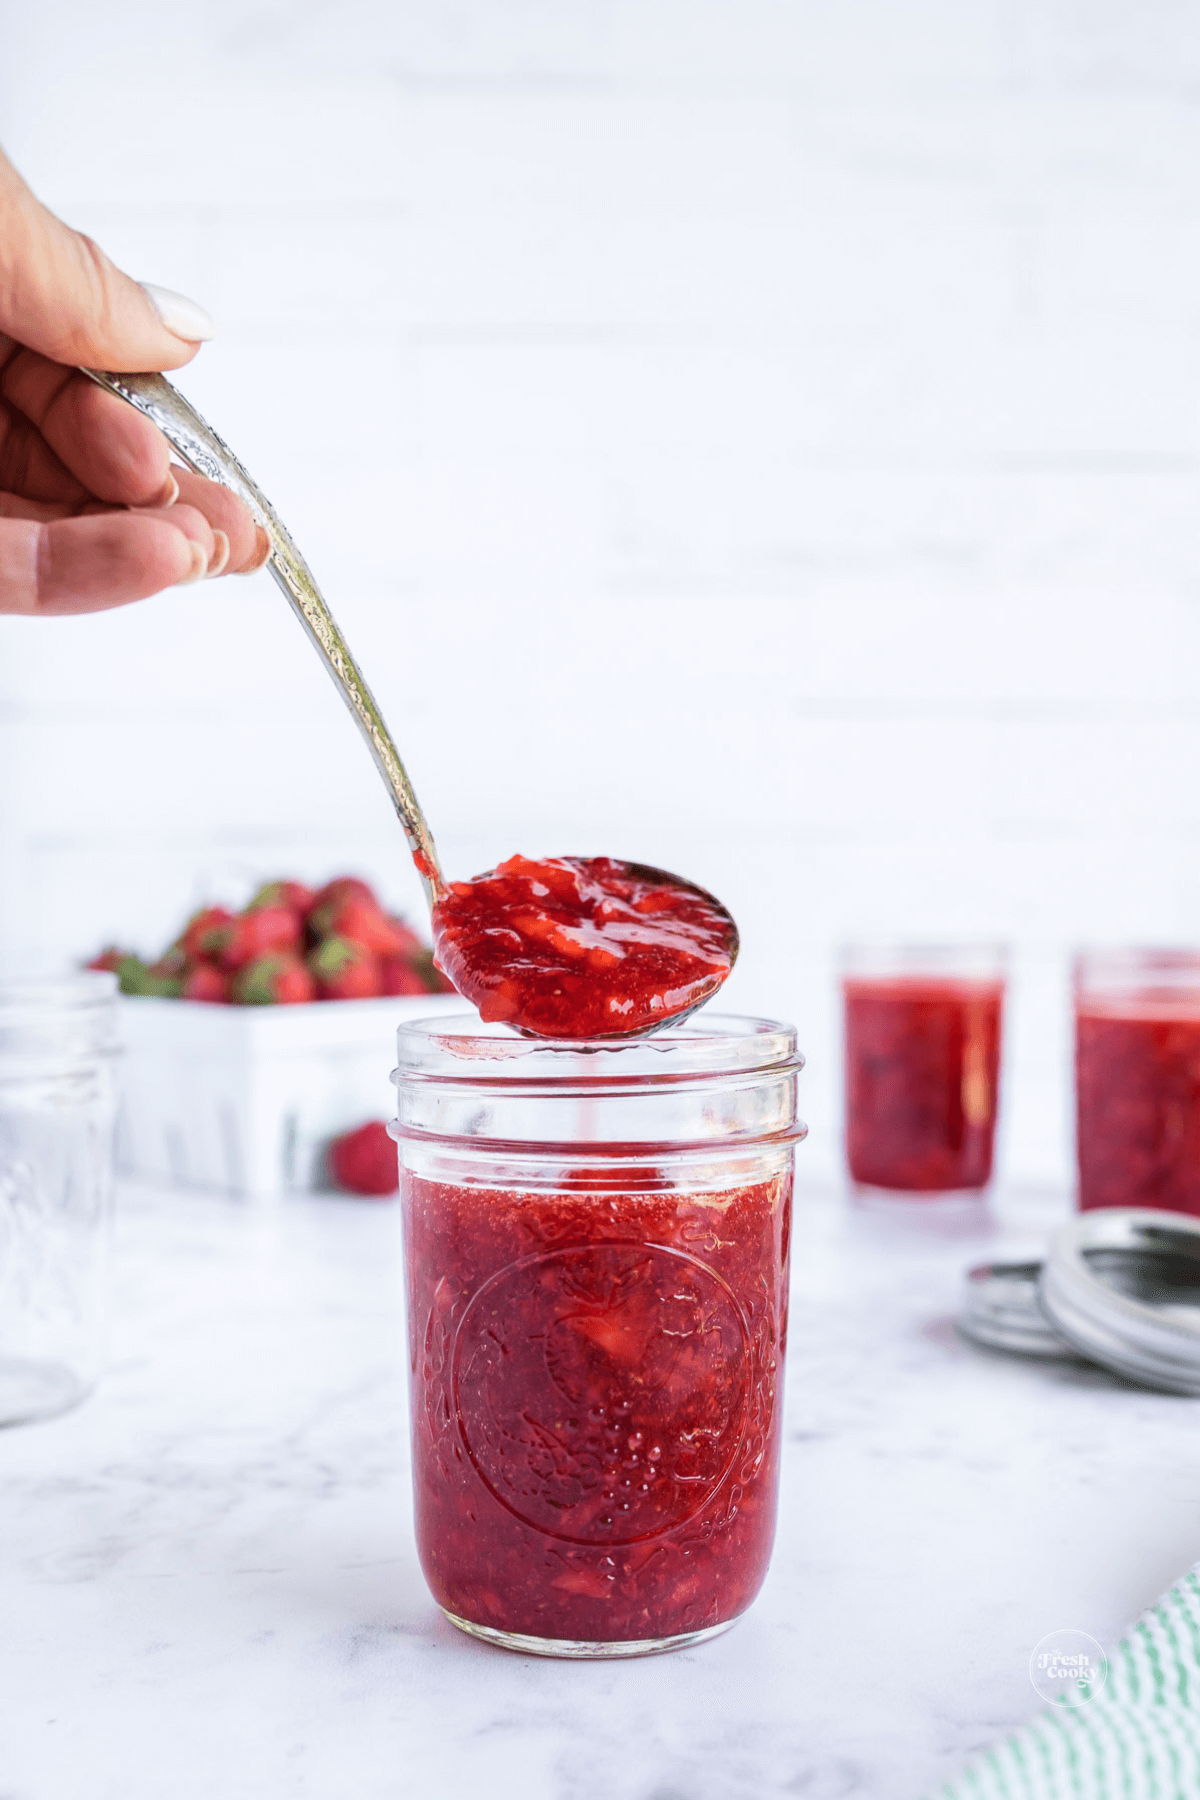 Ladling strawberry freezer jam into mason jar.